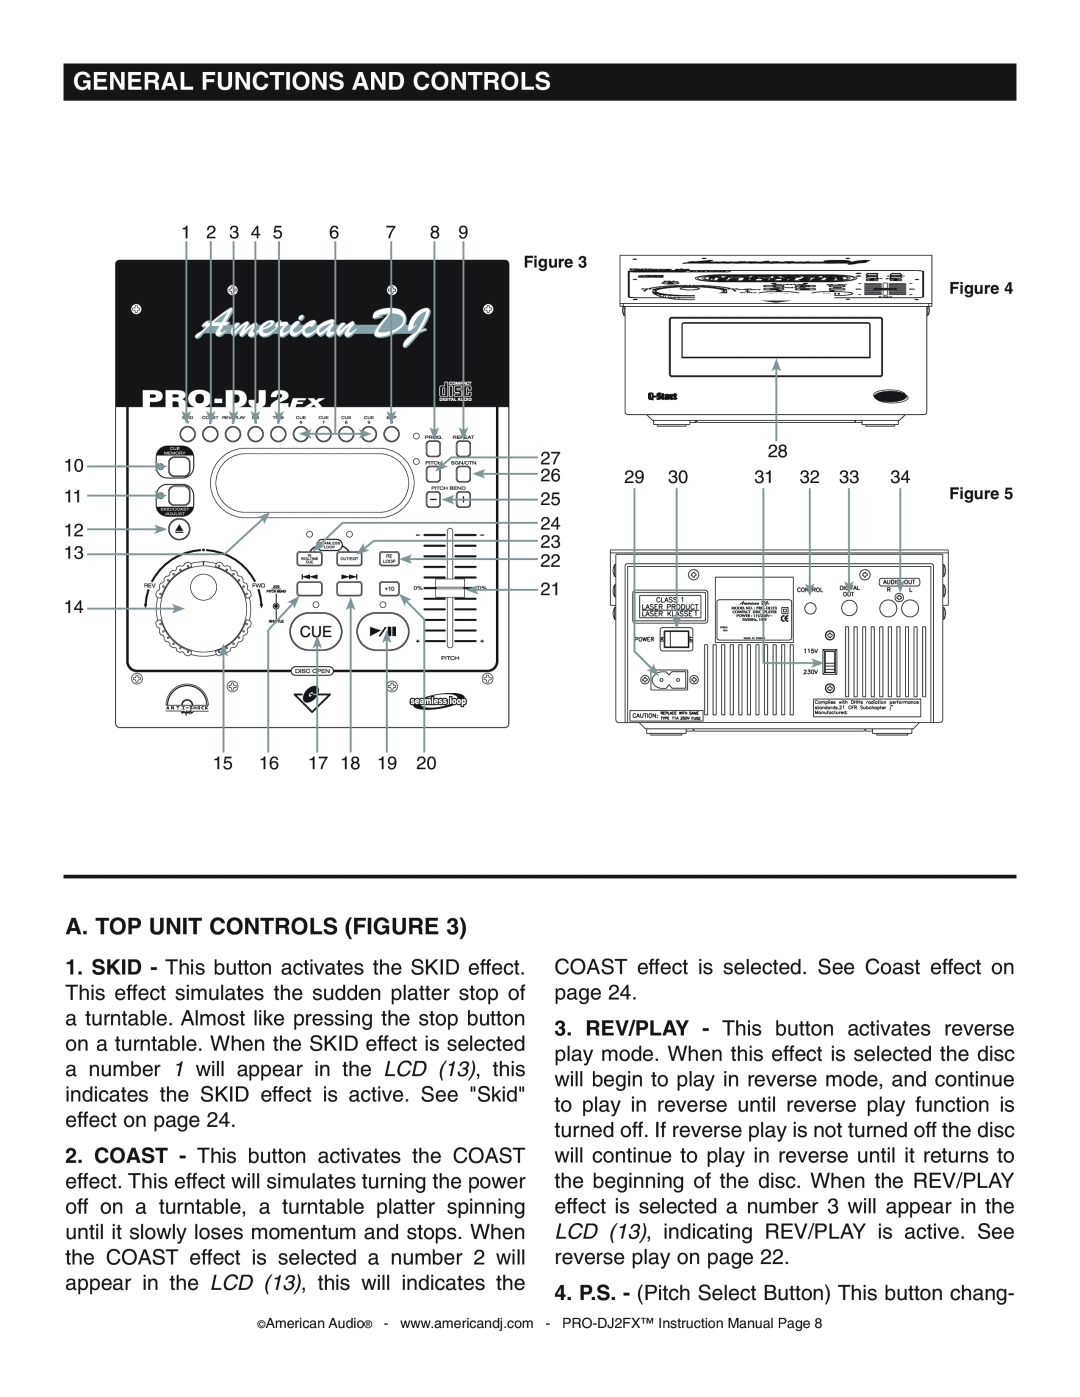 American Audio PRO-DJ2FX operating instructions General Functions And Controls, A. Top Unit Controls Figure 